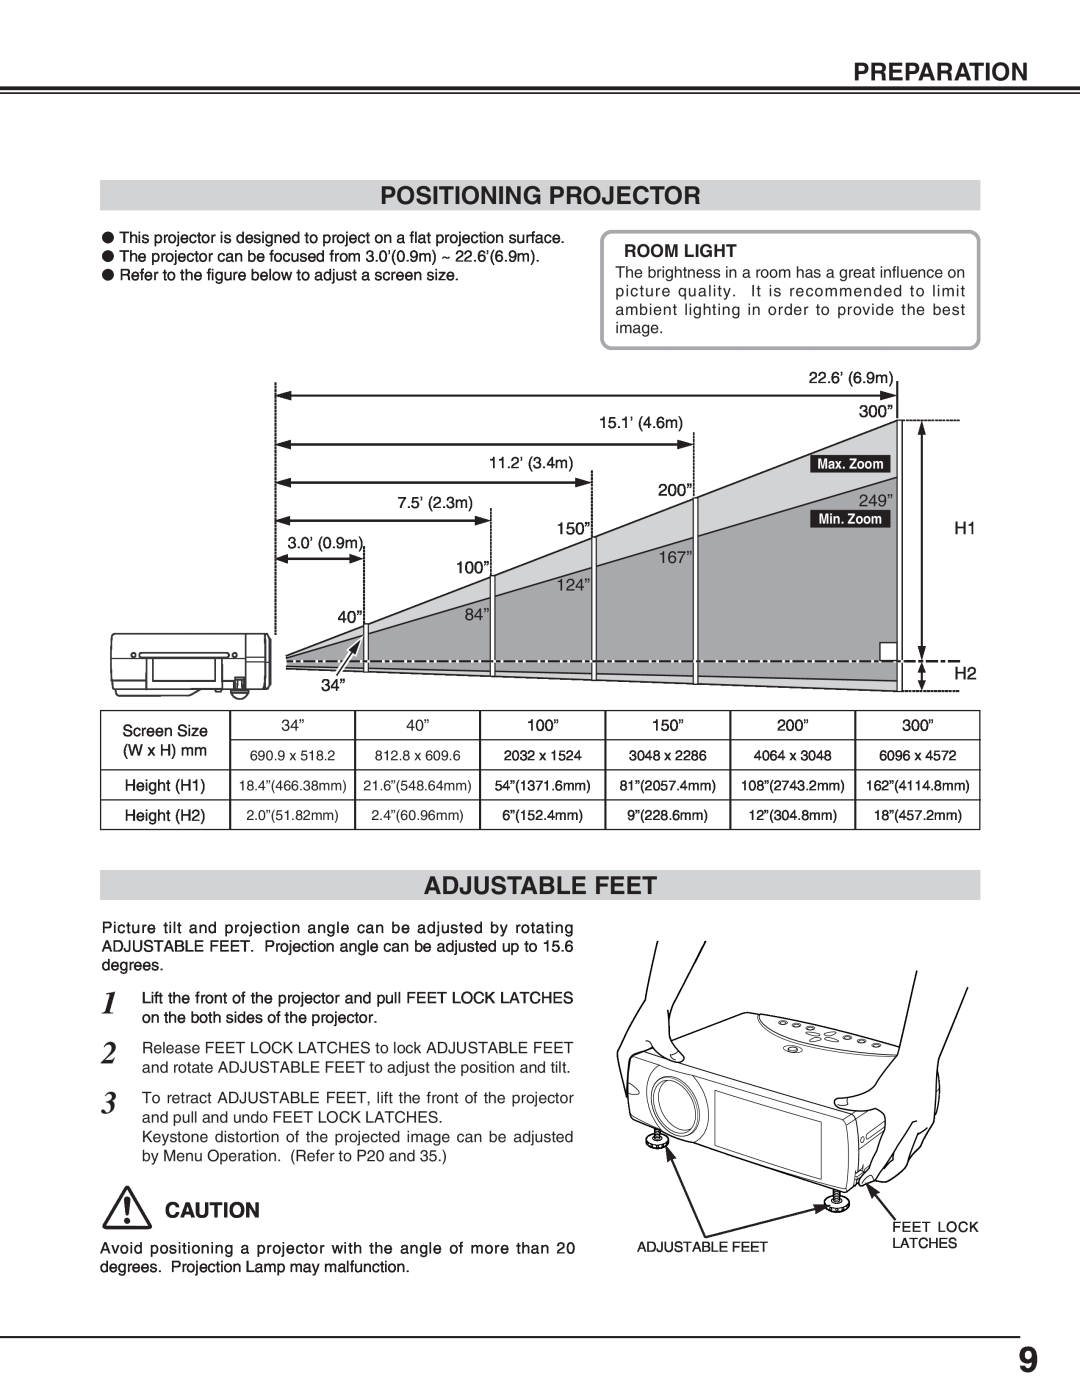 BOXLIGHT cp-305t manual Preparation Positioning Projector, Adjustable Feet, Room Light 